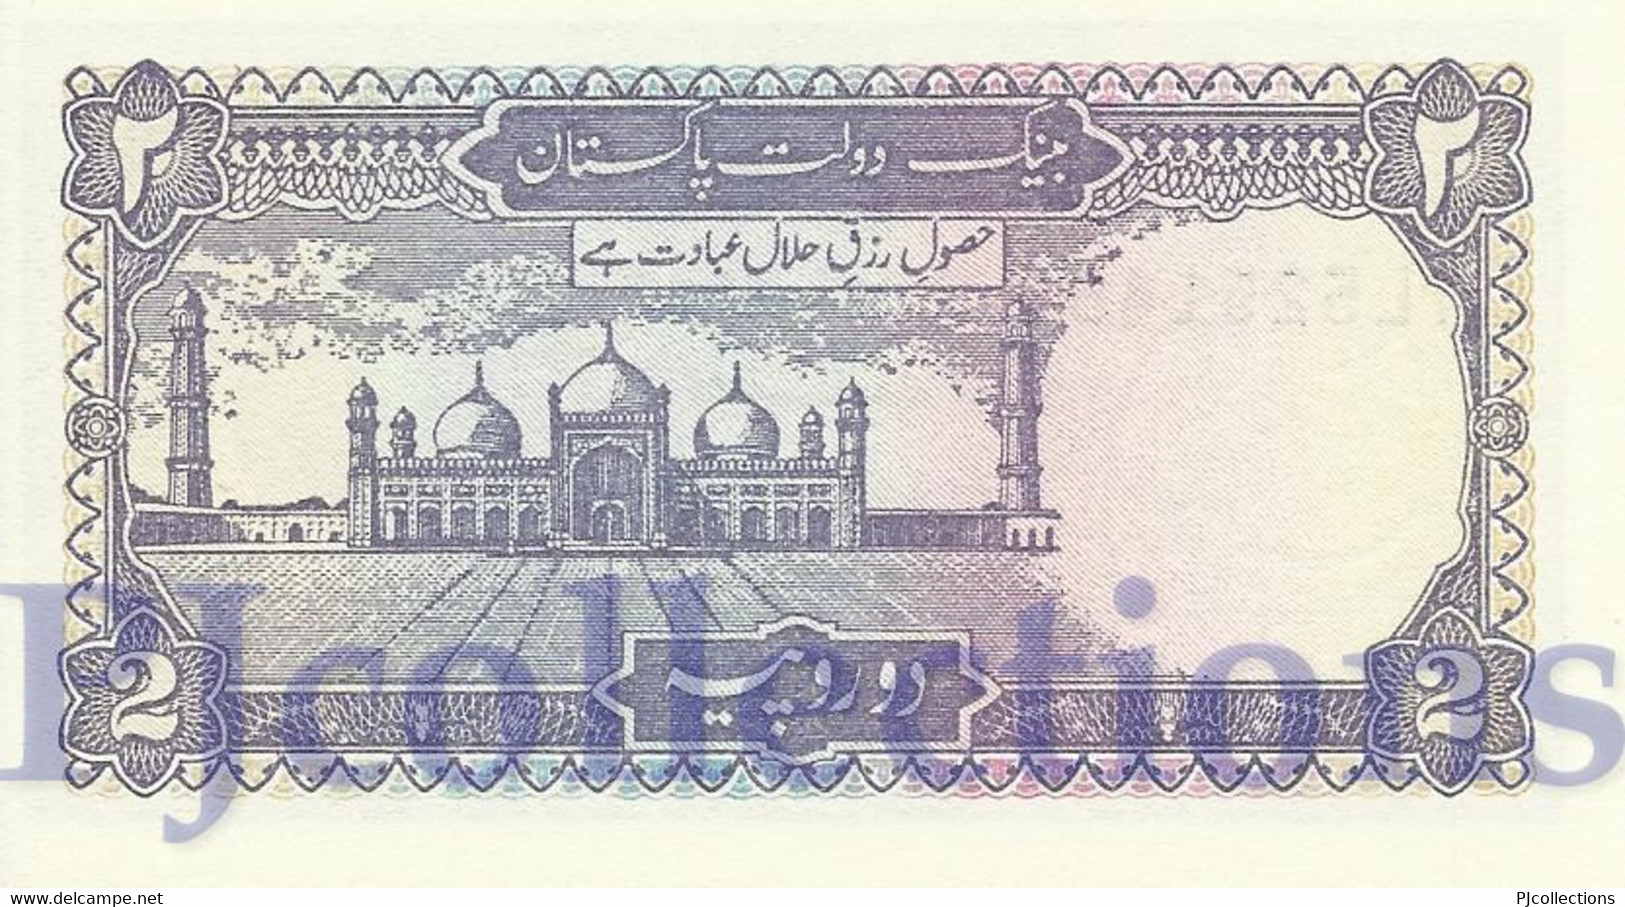 LOT PAKISTAN 2 RUPEES 1985/99 PICK 37 UNC X 5 PCS - Pakistan